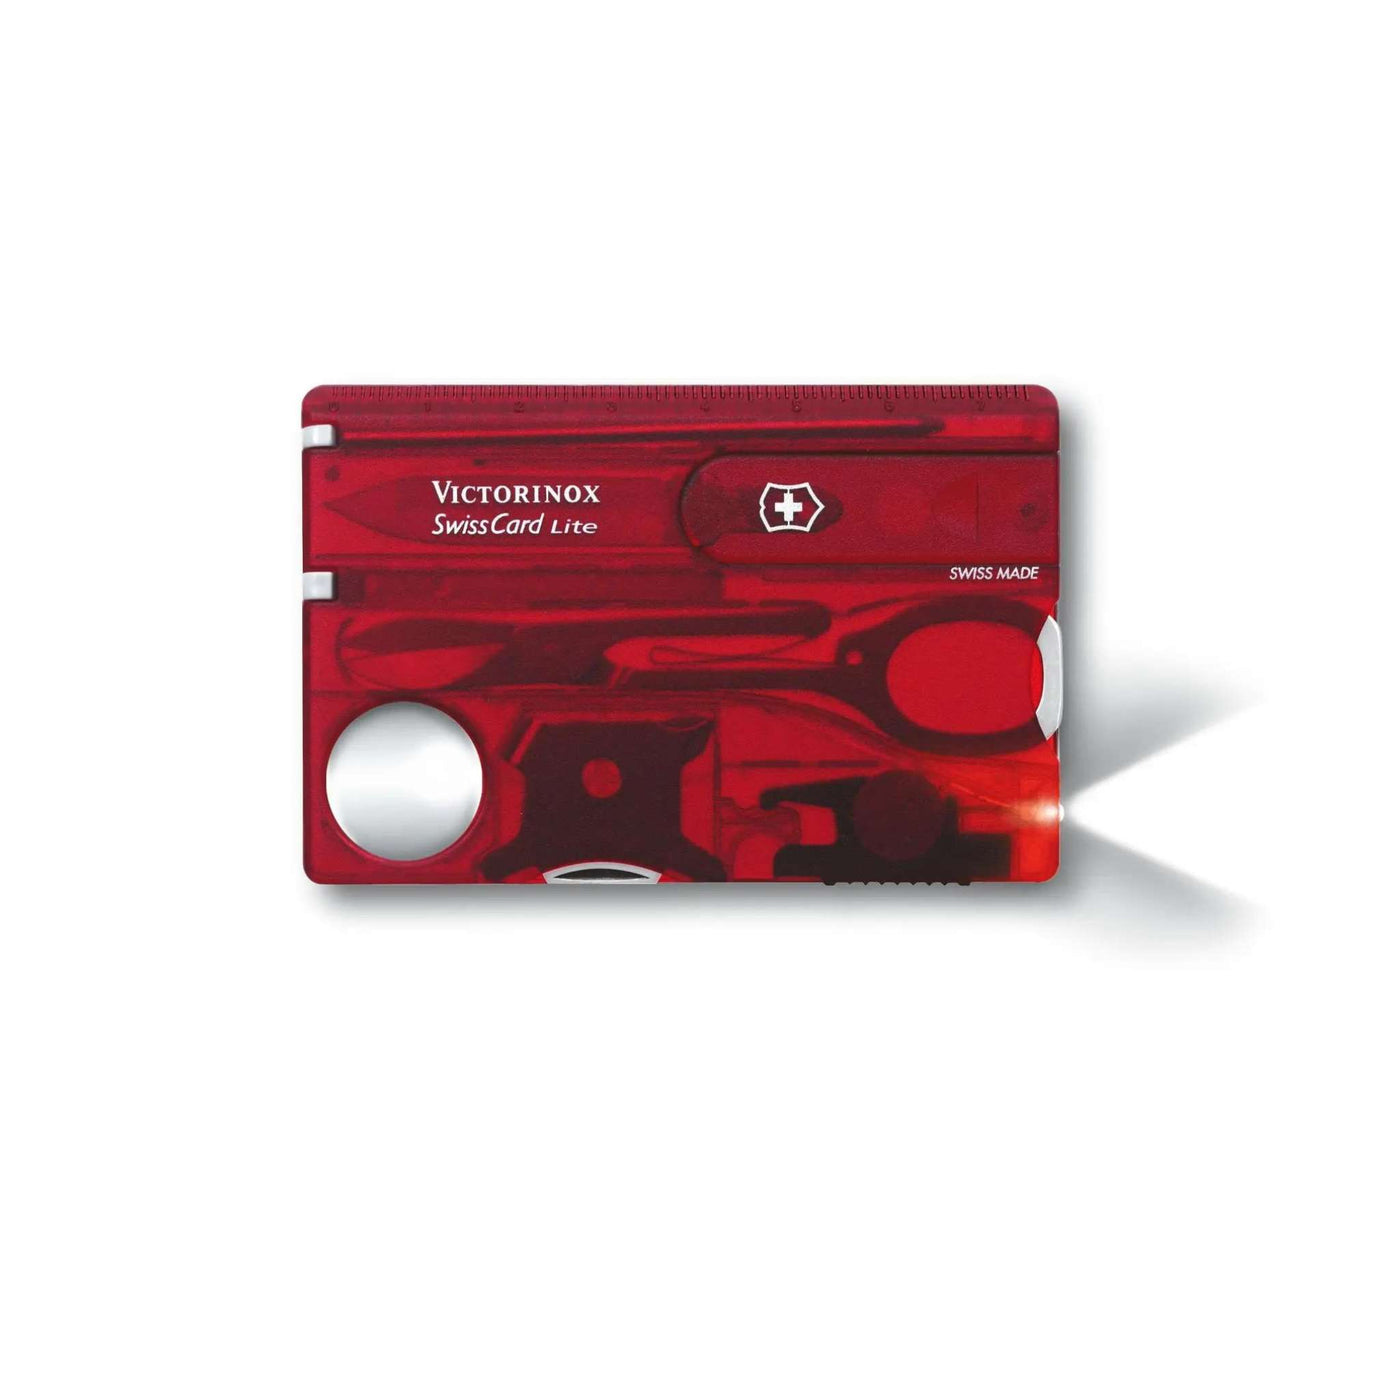 Victorinox Swiss Card Lite